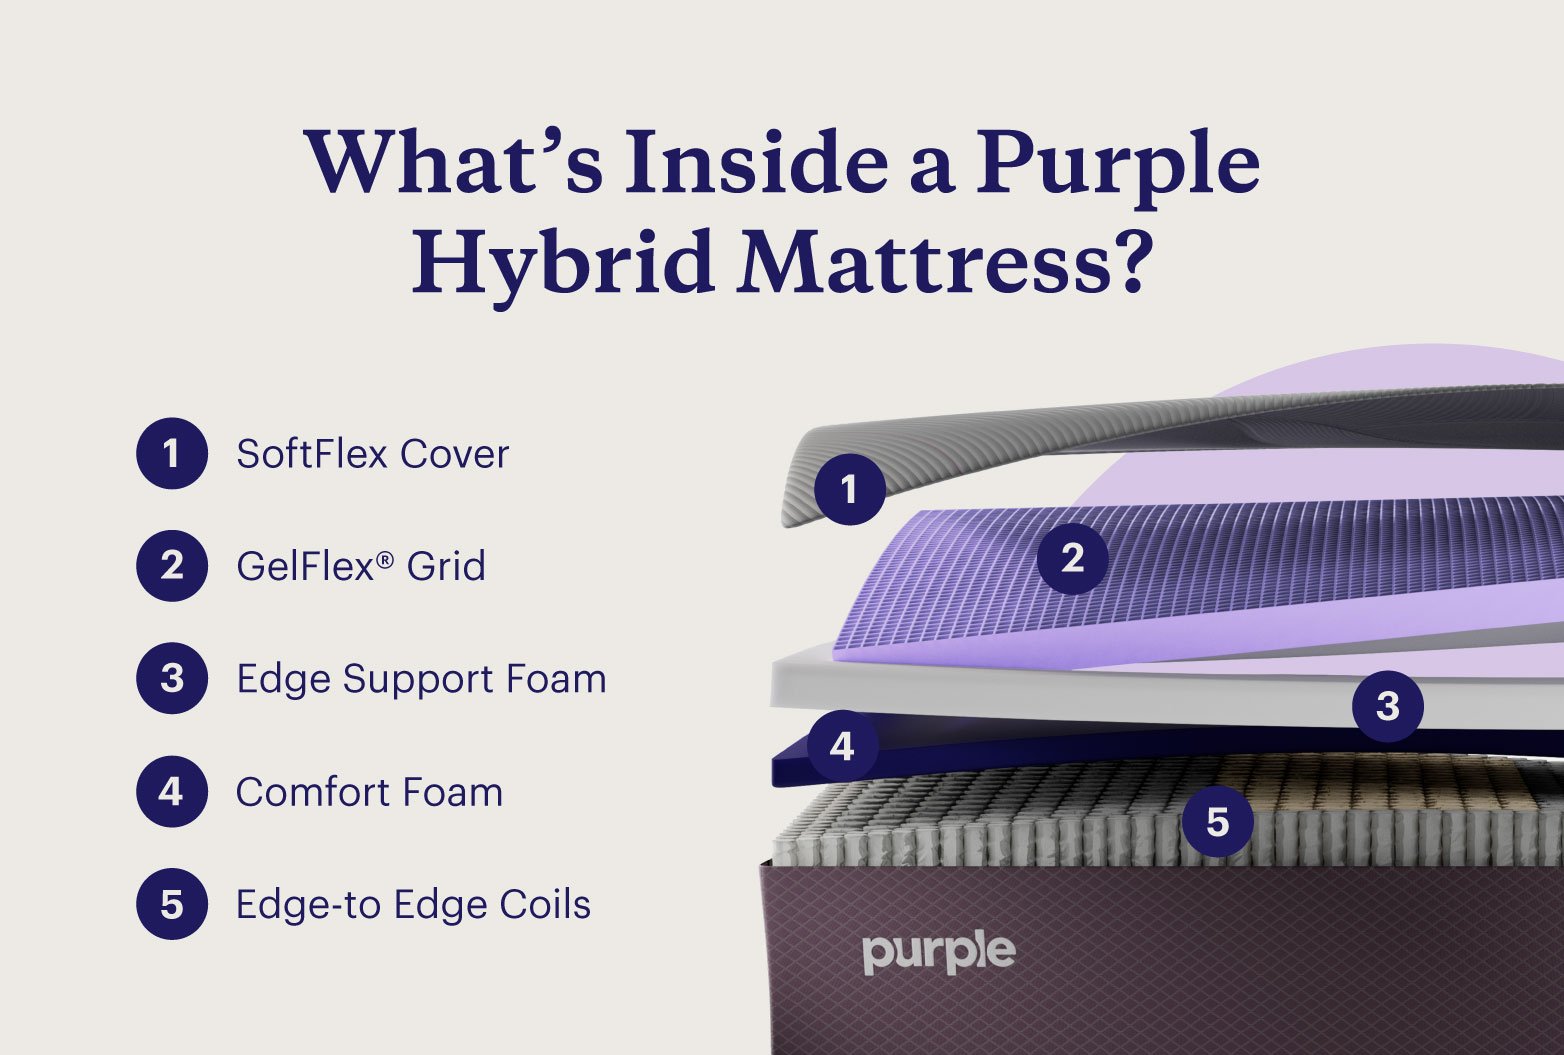 An illustration of the anatomy of a Purple Hybrid mattress.